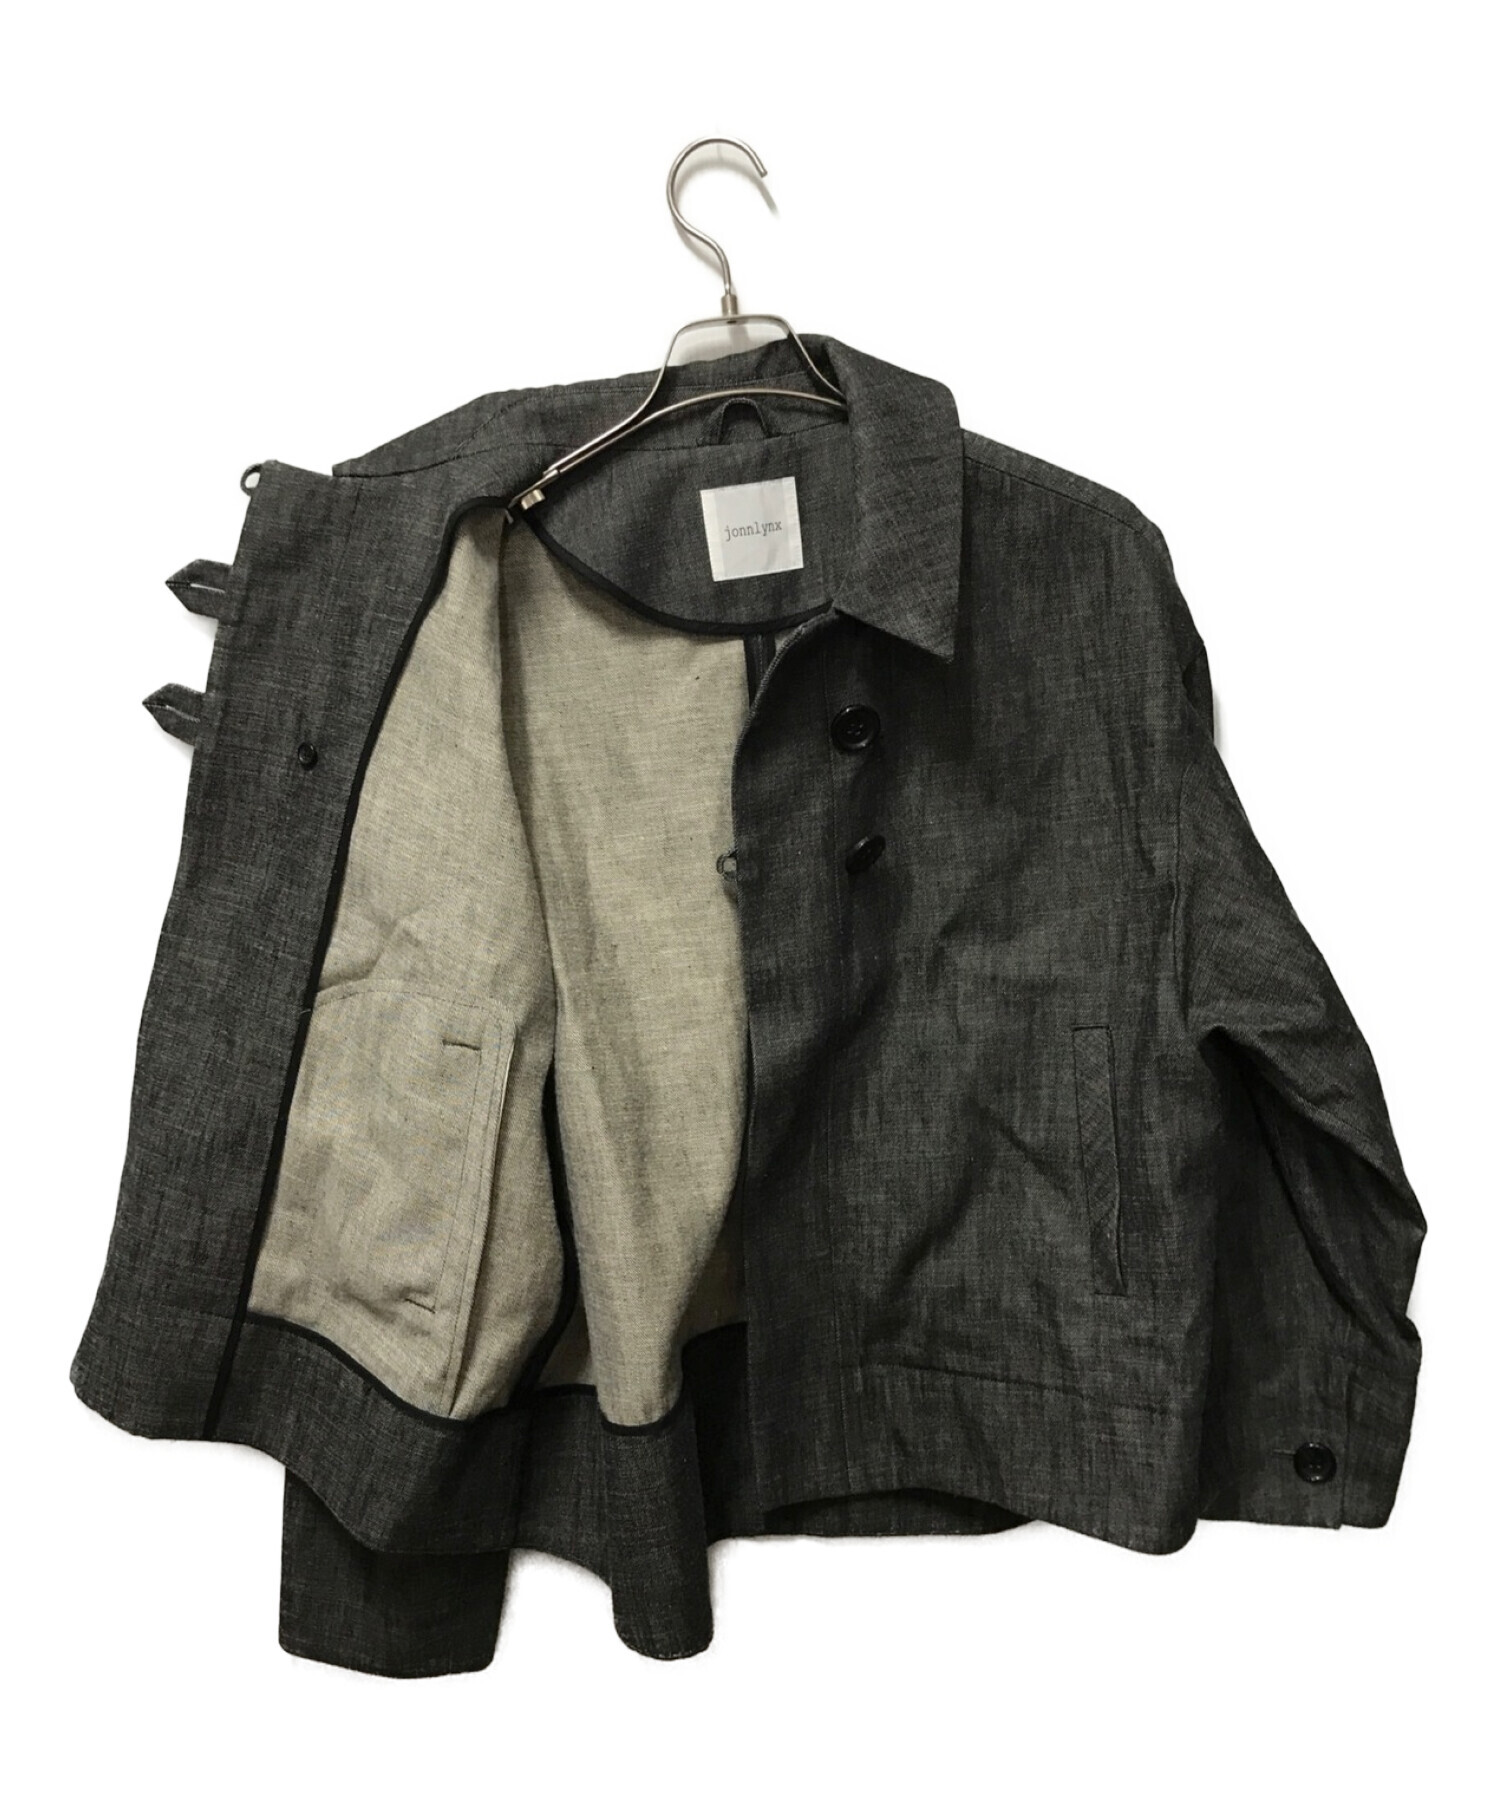 jonnlynx (ジョンリンクス) hemp jacket グレー サイズ:Ｍ